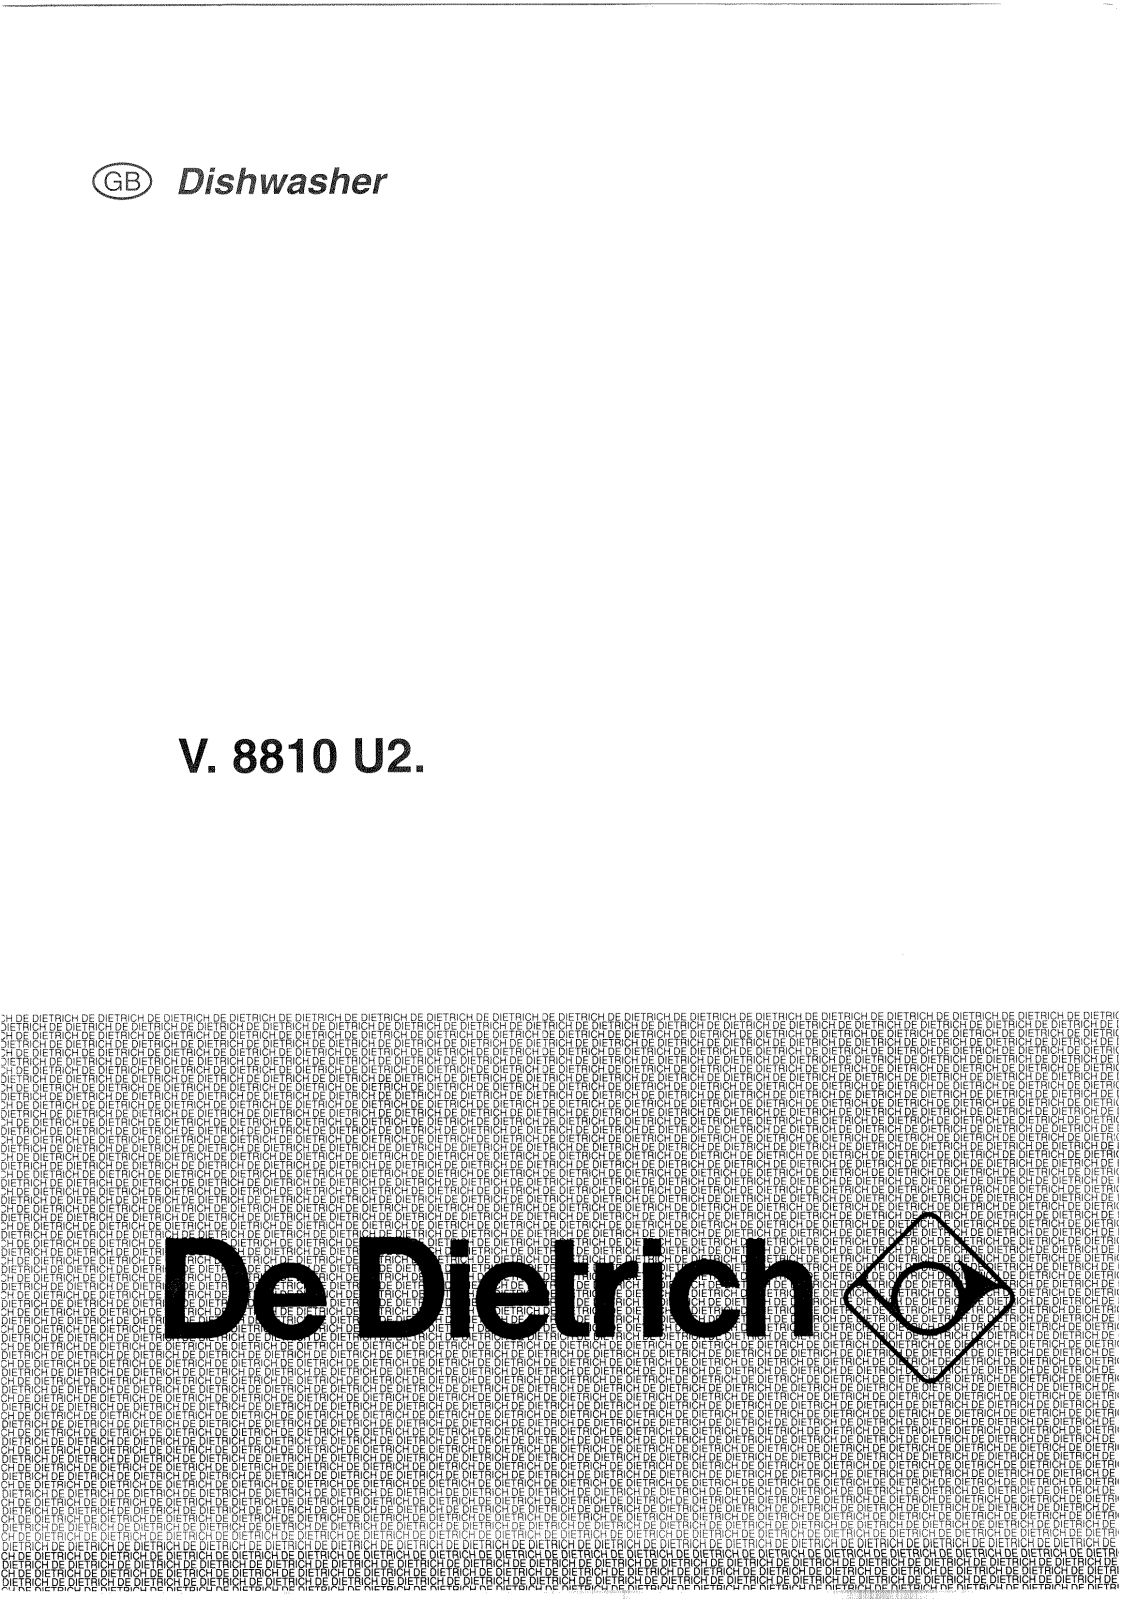 De dietrich VN8810U2, VB8810U2, VW8810U2 User Manual